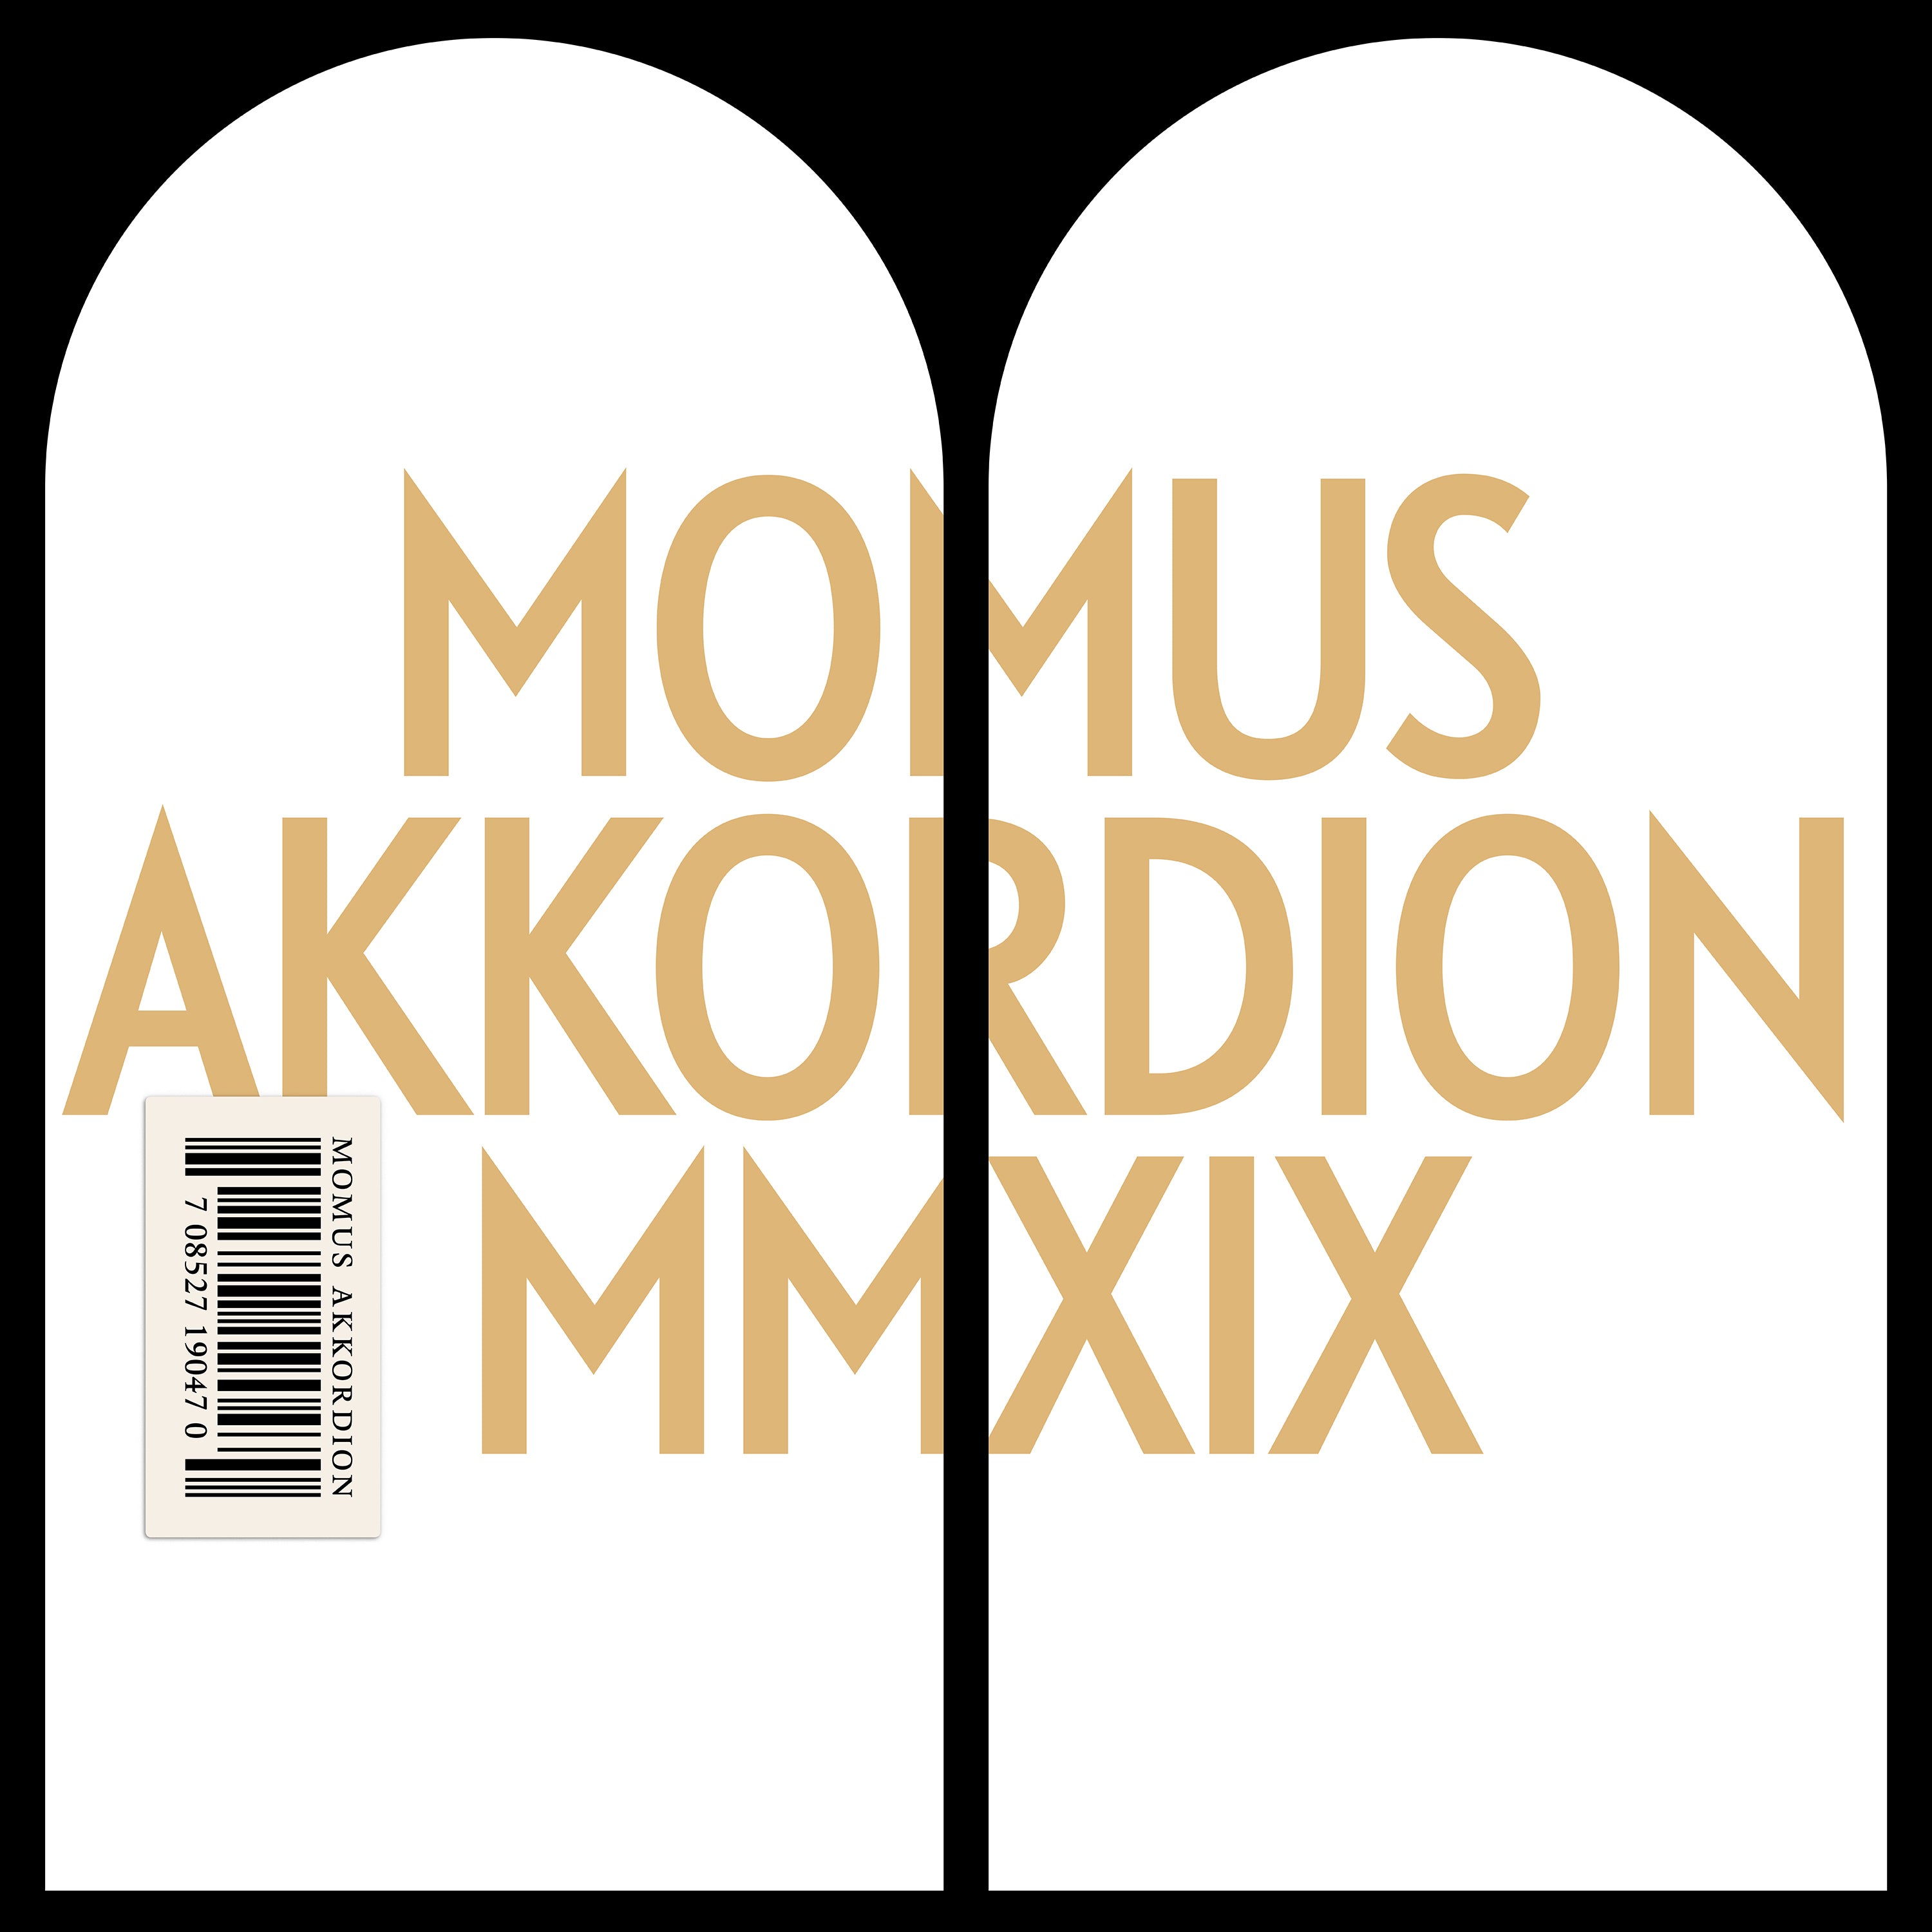 Momus - Akkordion